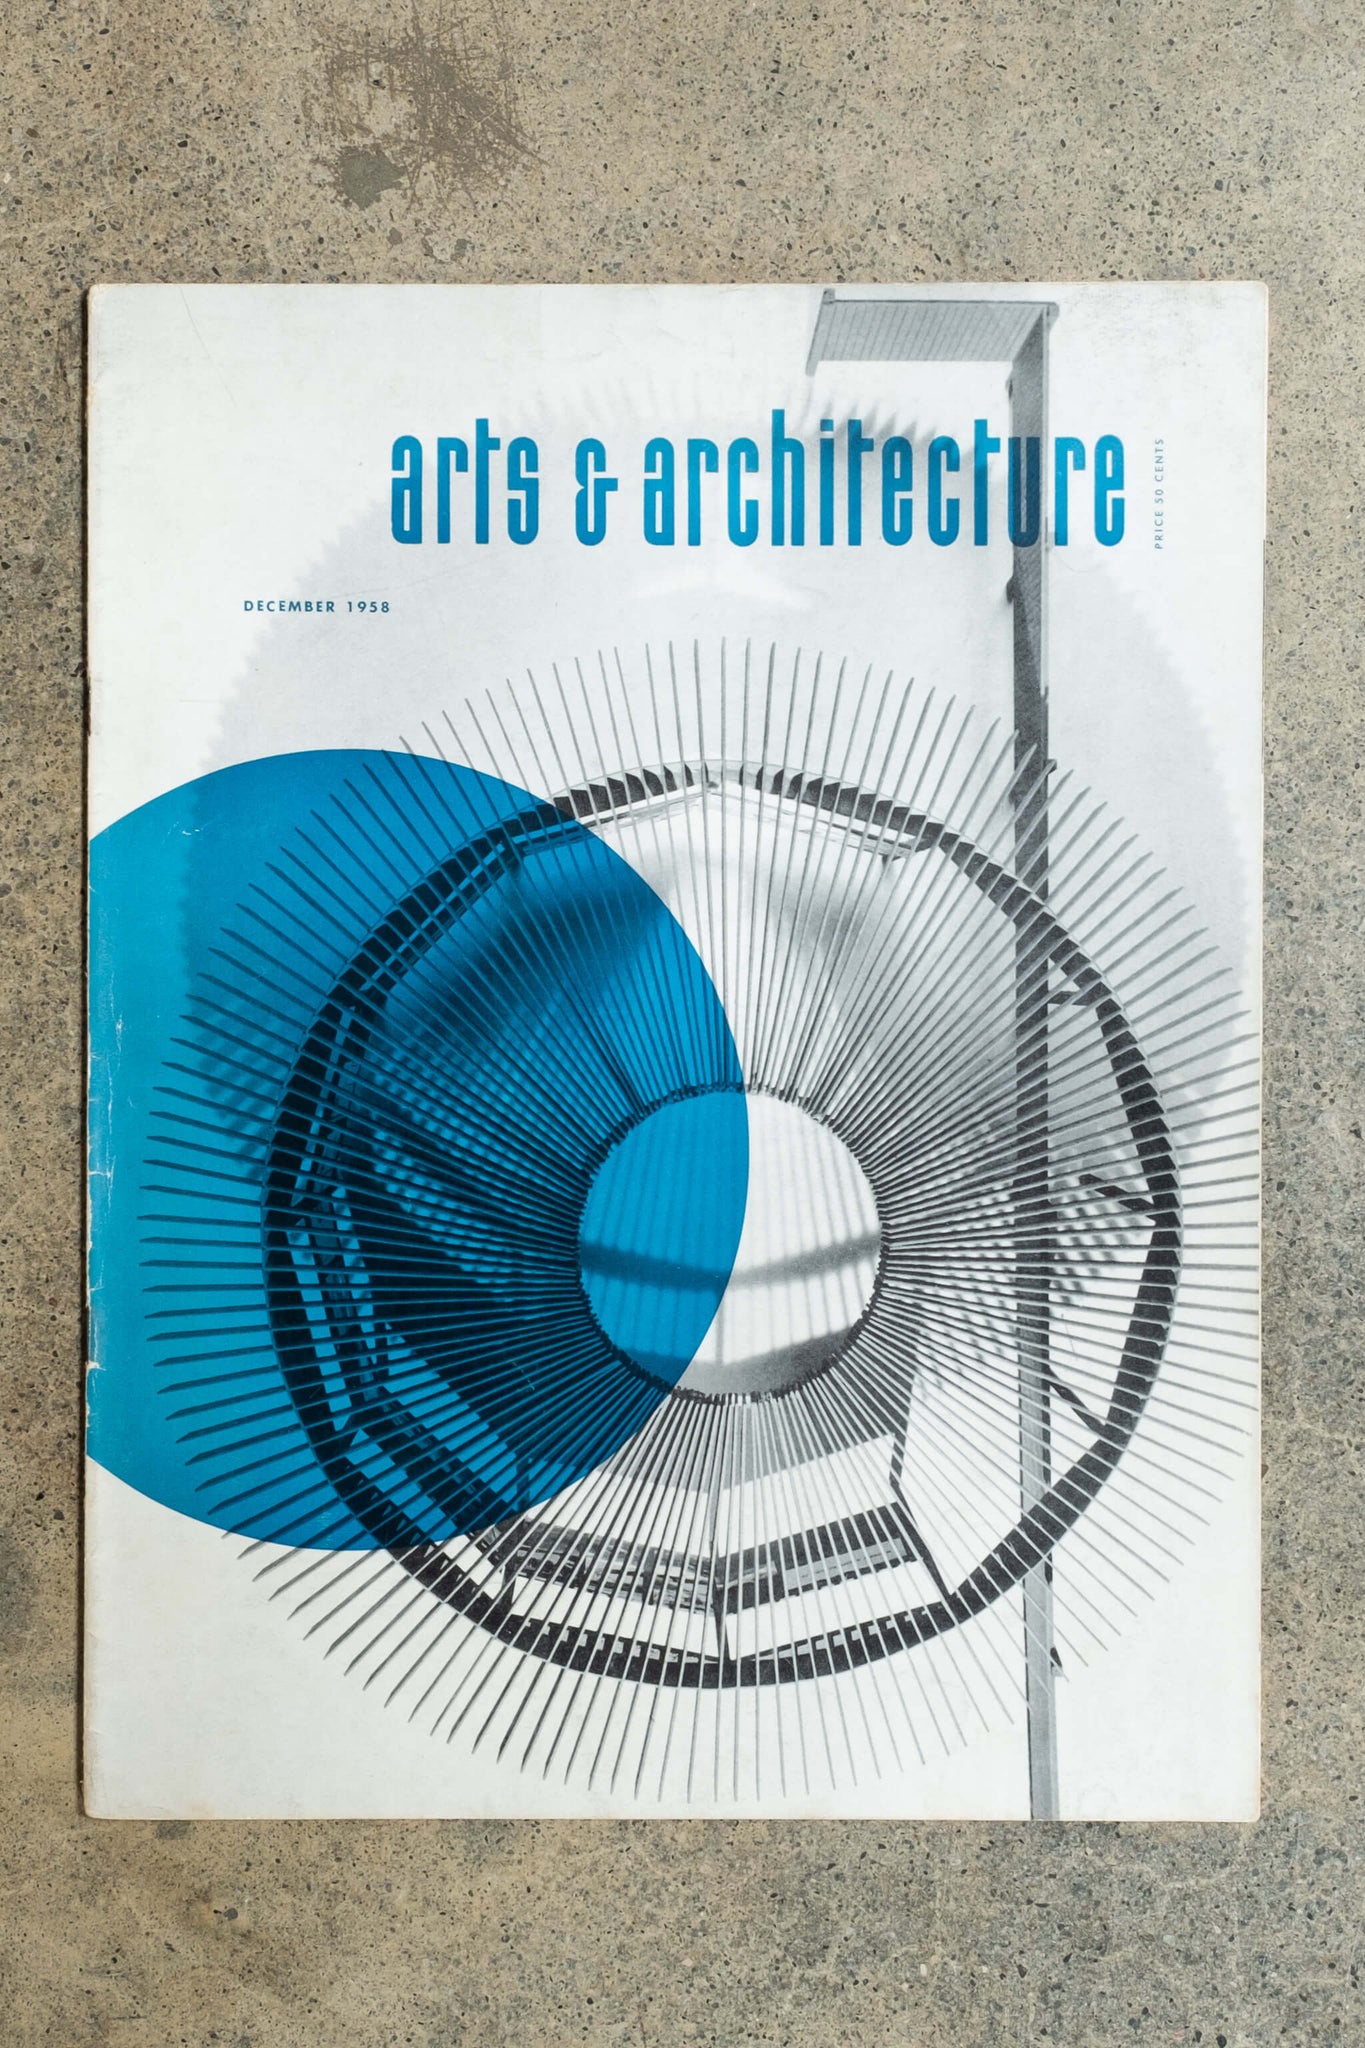 Arts & Architecture Vintage Magazine, December 1958